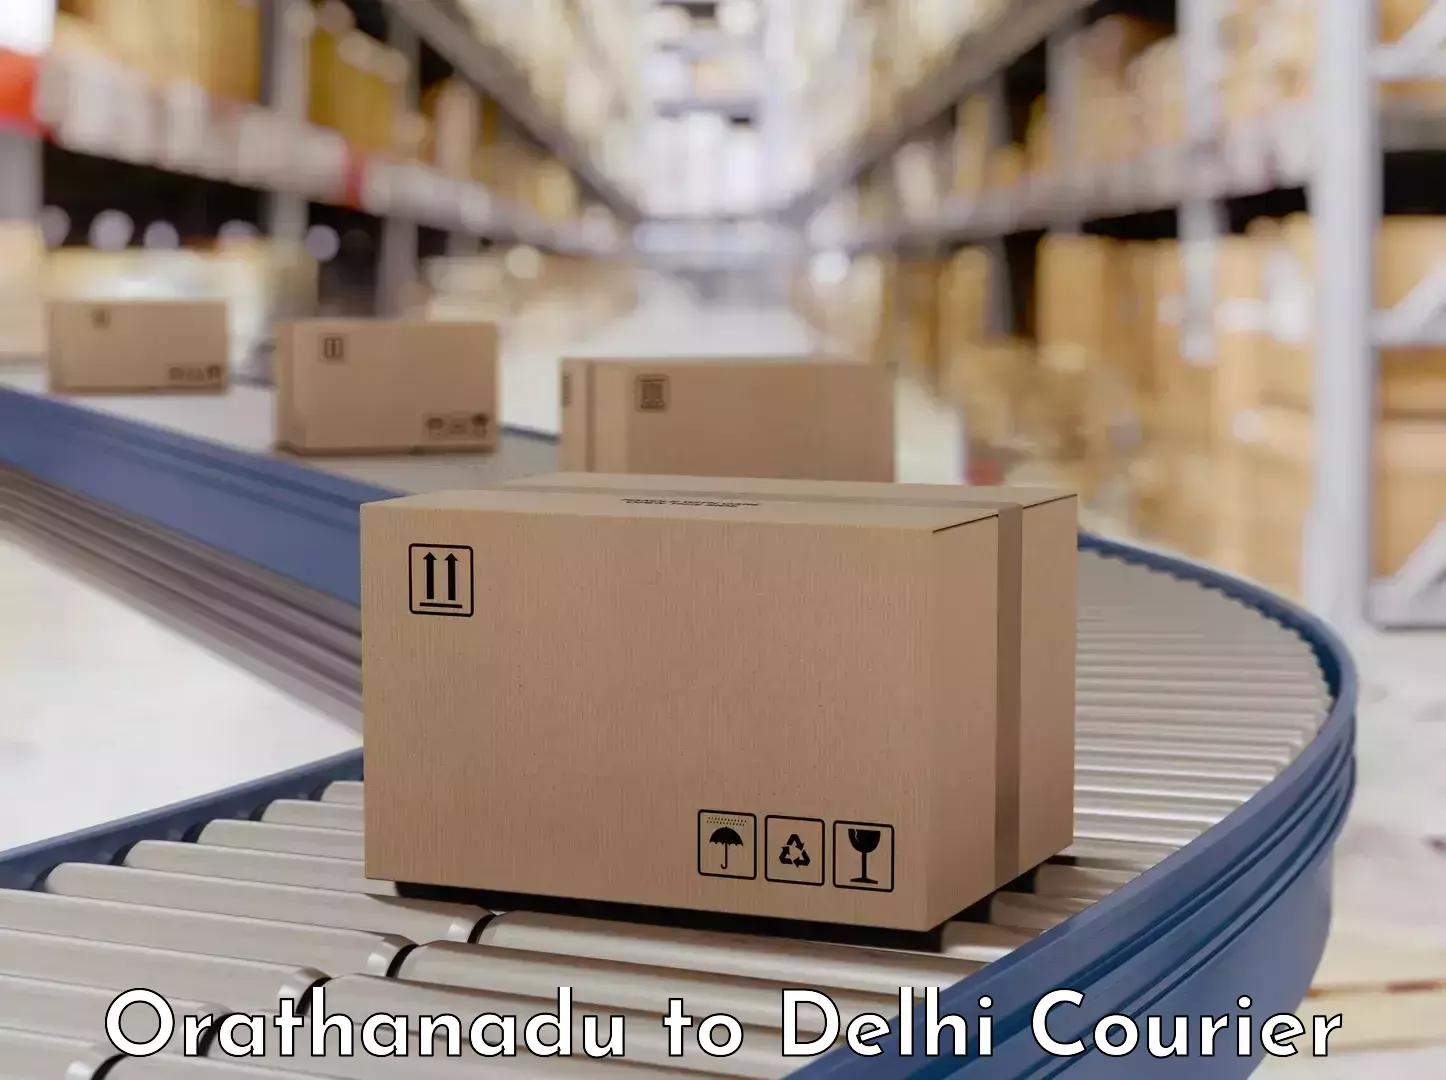 Specialized moving company Orathanadu to East Delhi